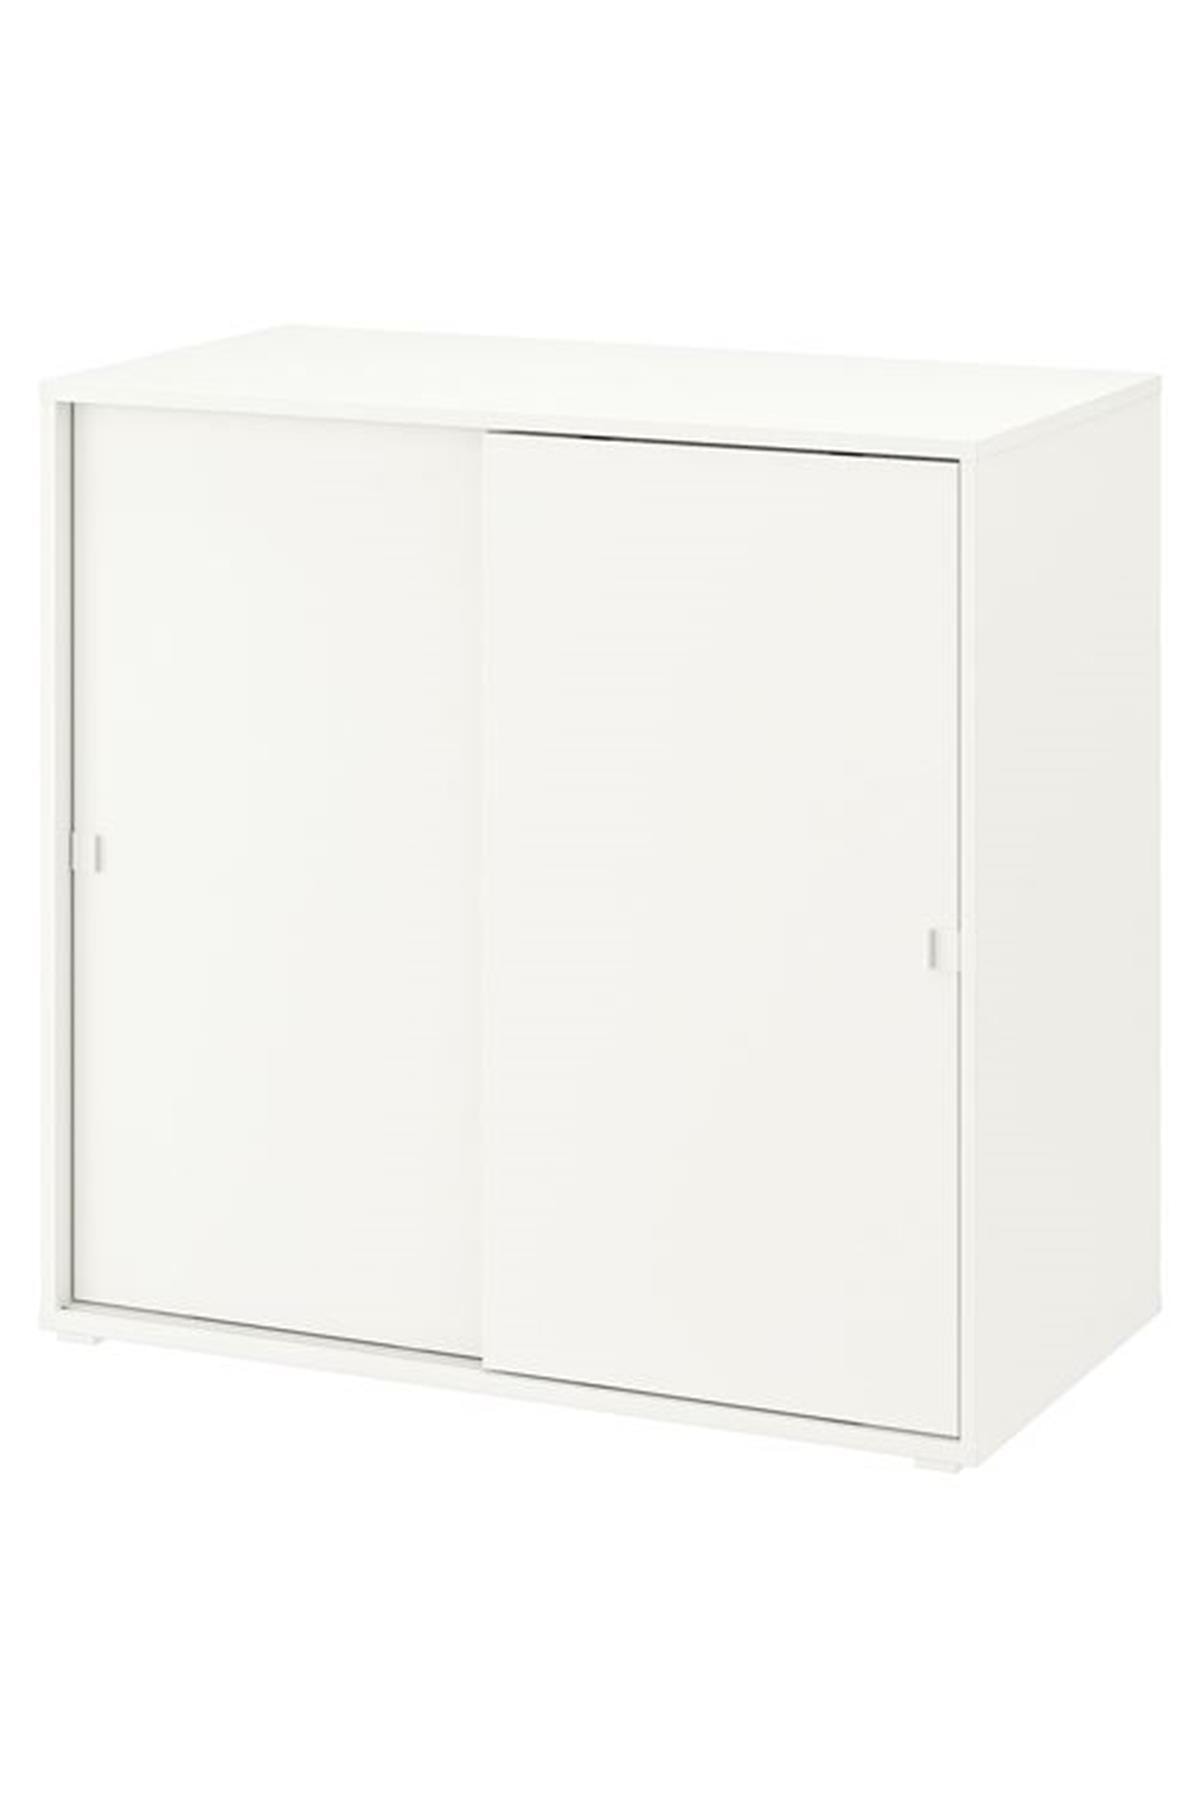 IKEA Vıhals Beyaz Renk Sürgü Kapaklı Dolap 95x47x90 Cm